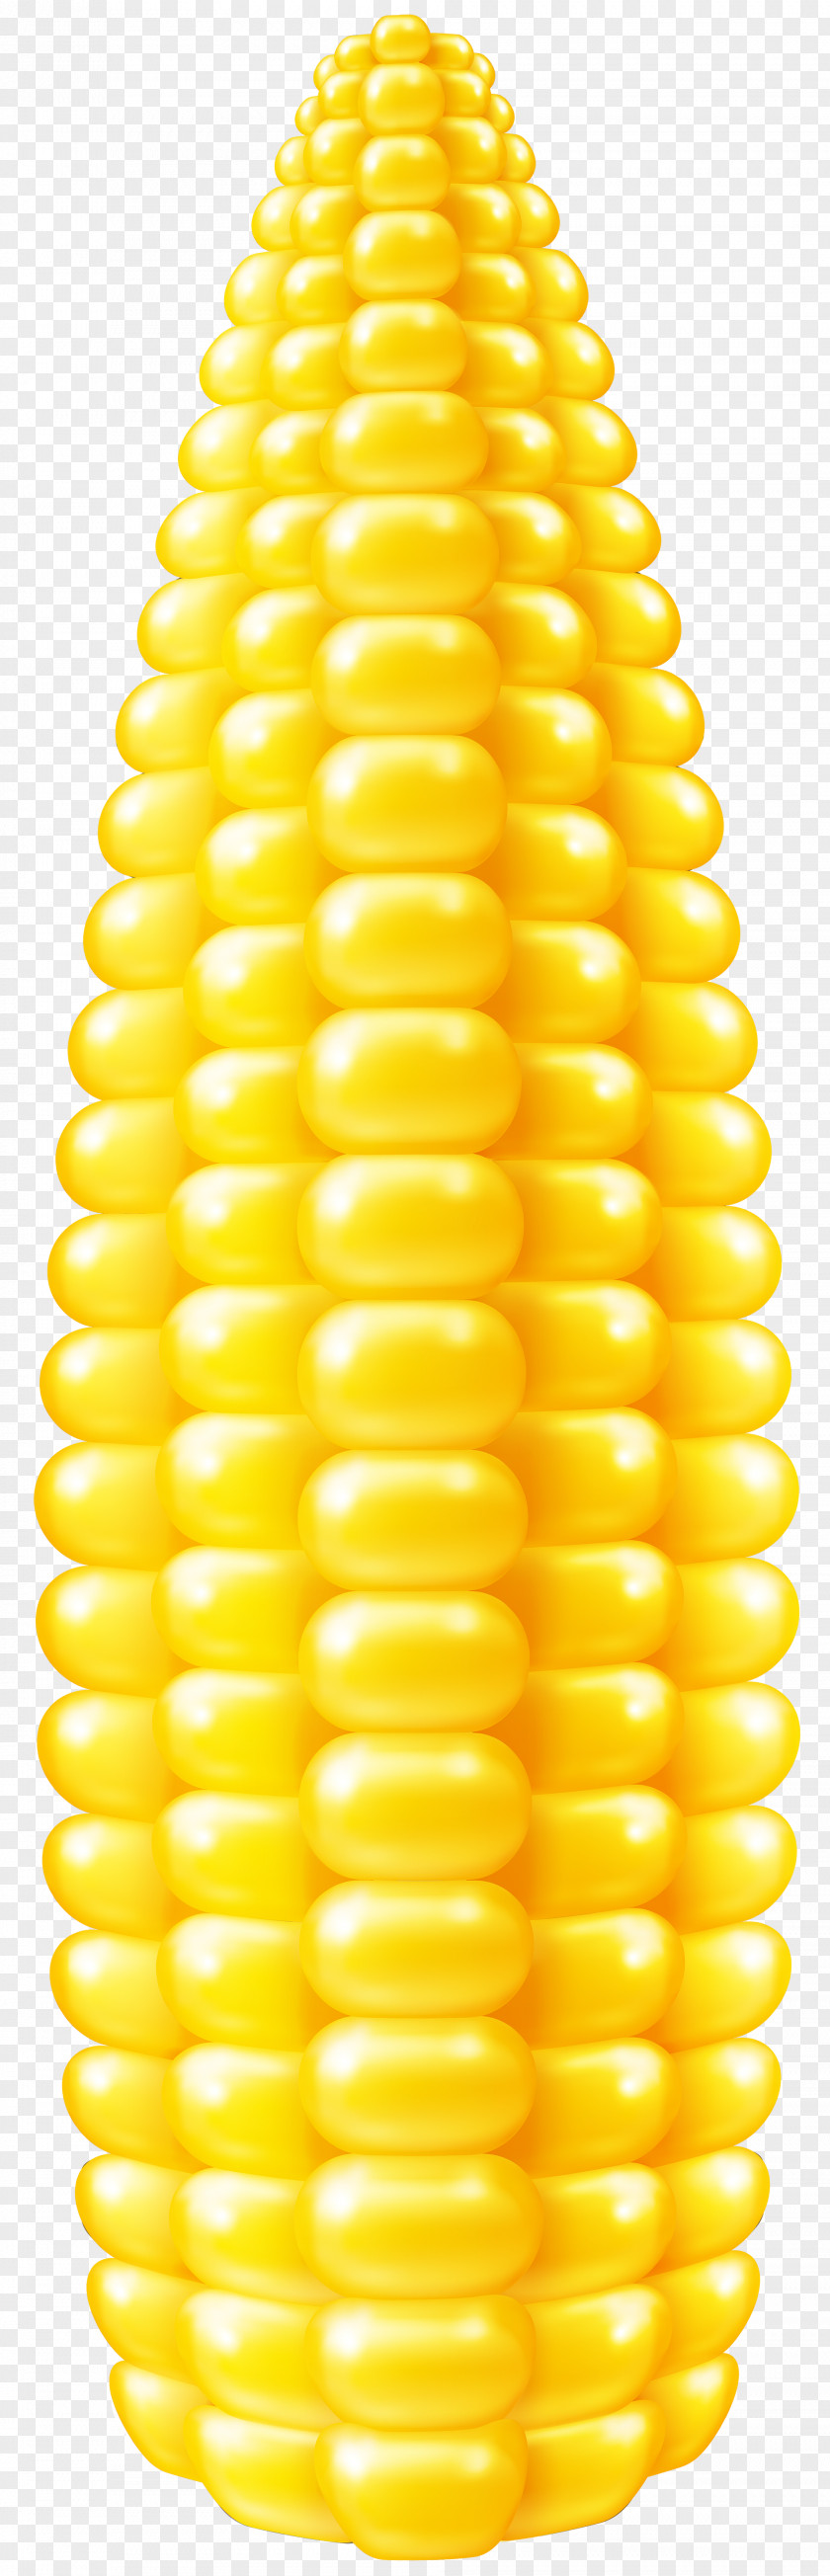 Corn Clip Art Image On The Cob Maize Stock Illustration Corncob PNG